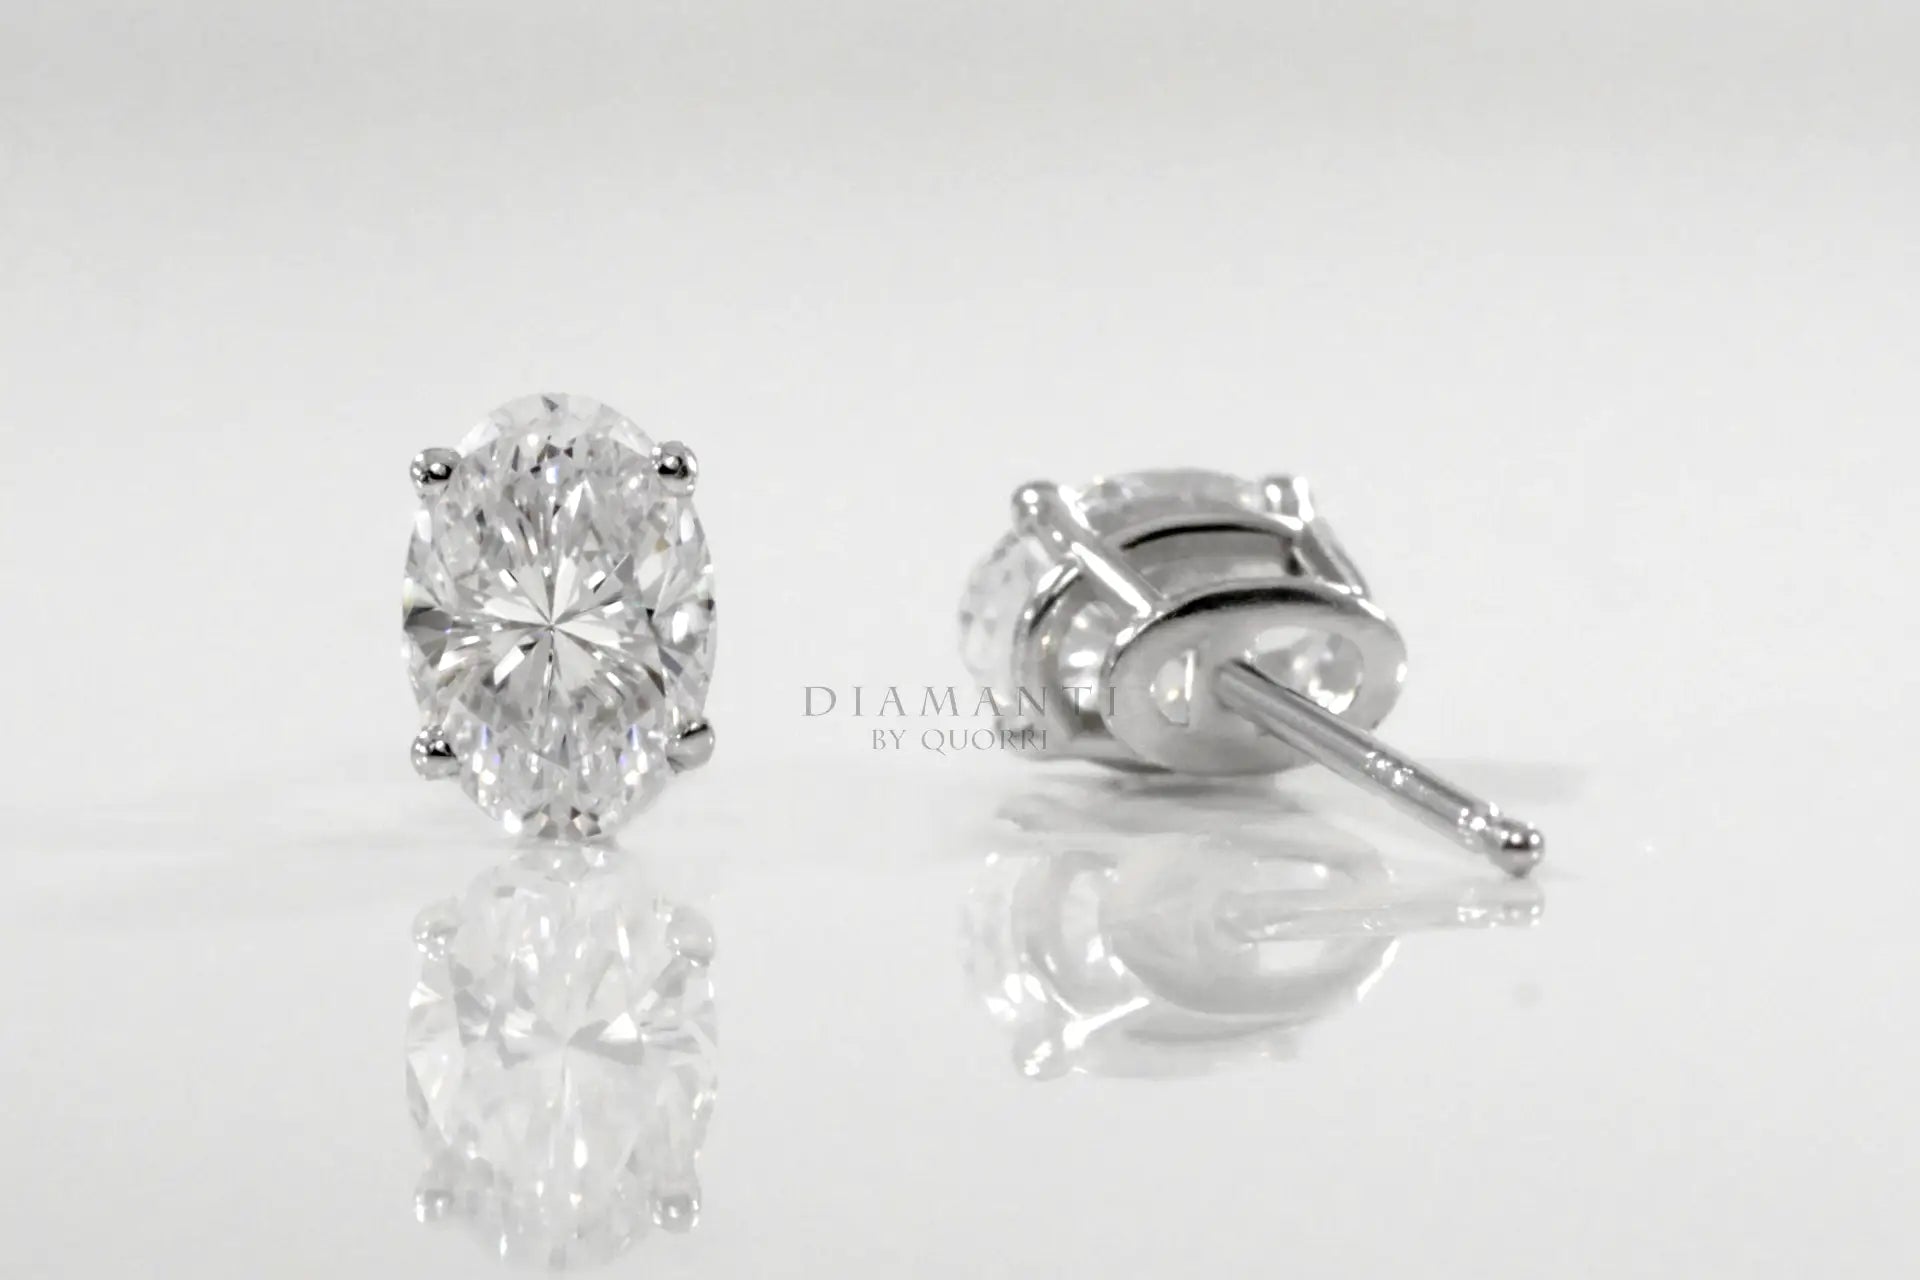 18k white gold 2.5 carat oval lab diamond stud earrings Quorri